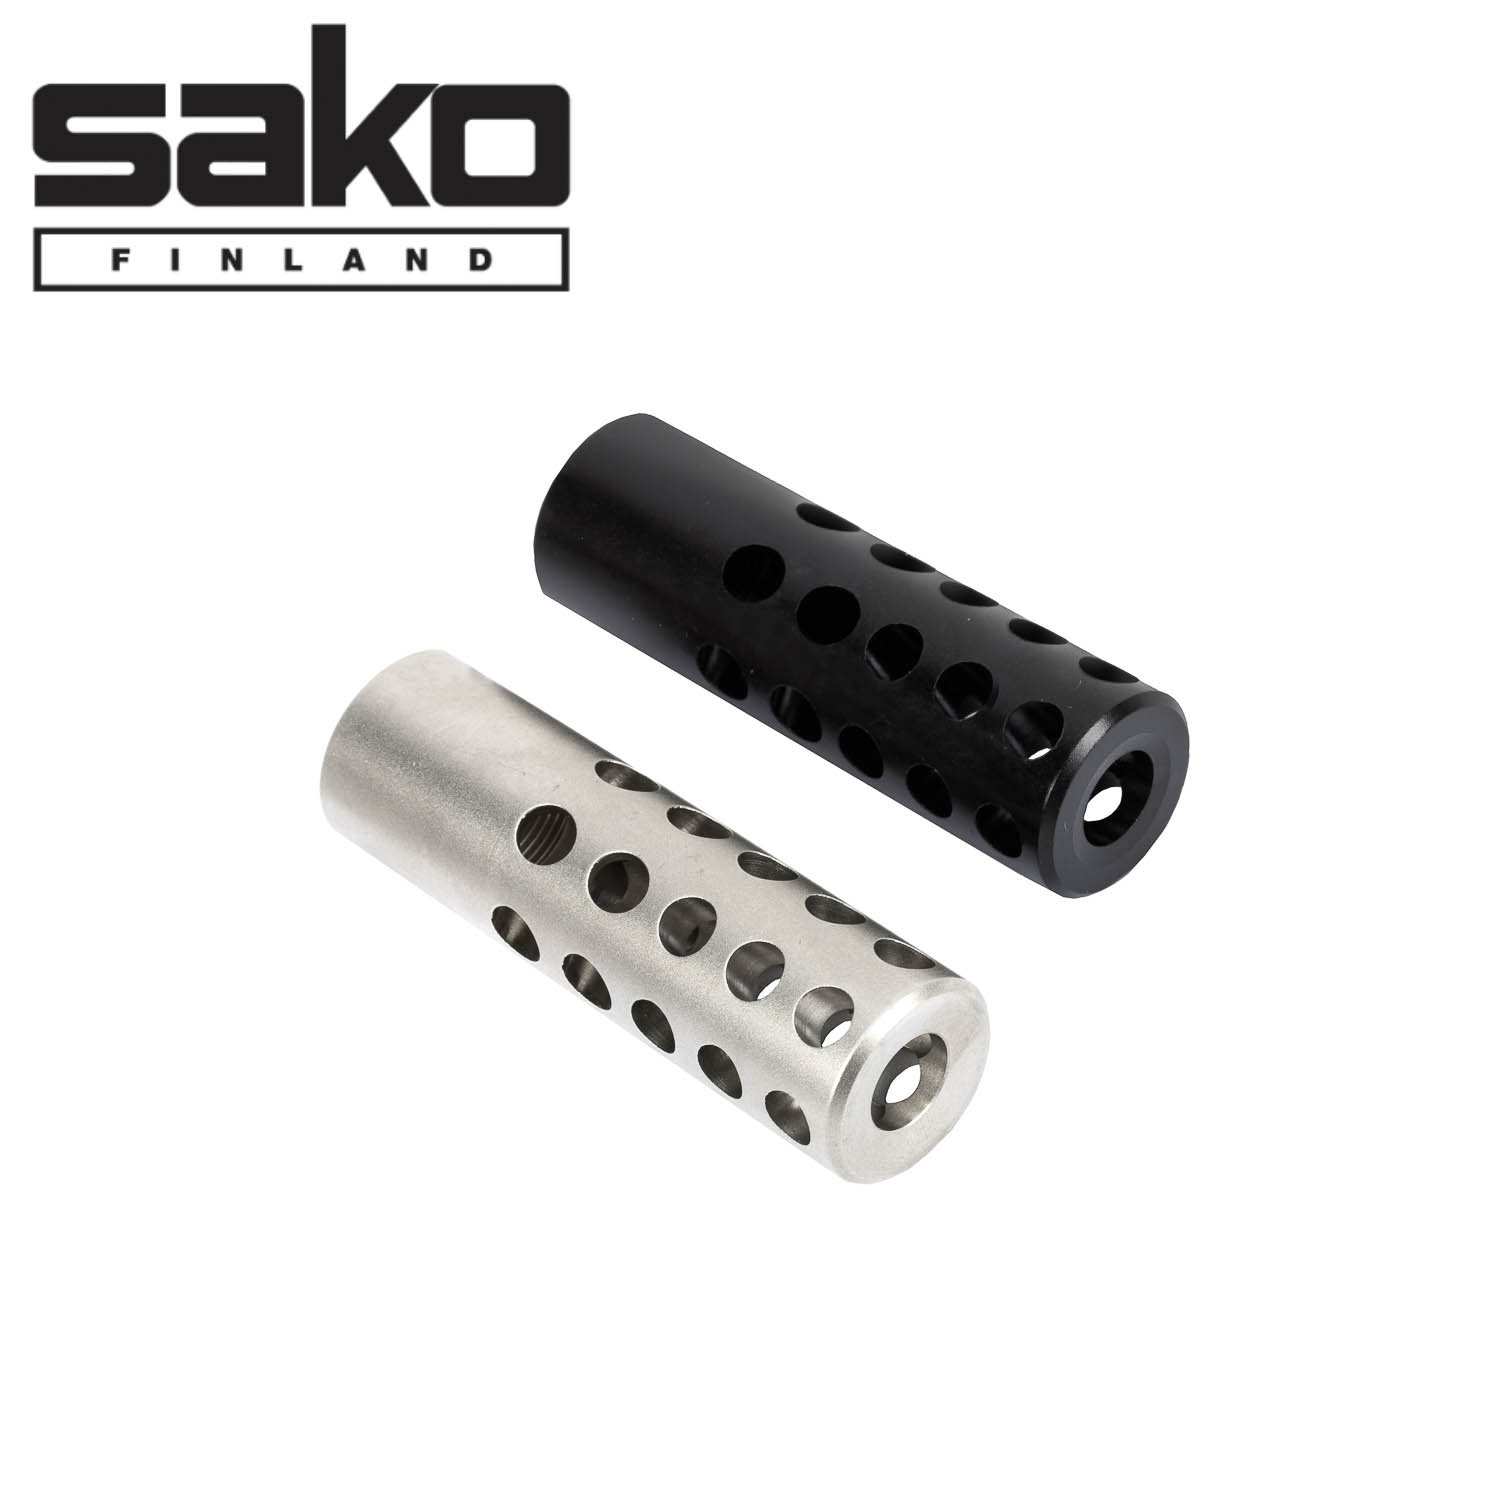 Tikka/Sako Slim Muzzle Brake, M18x1 Thread, .308 Cal.: MGW